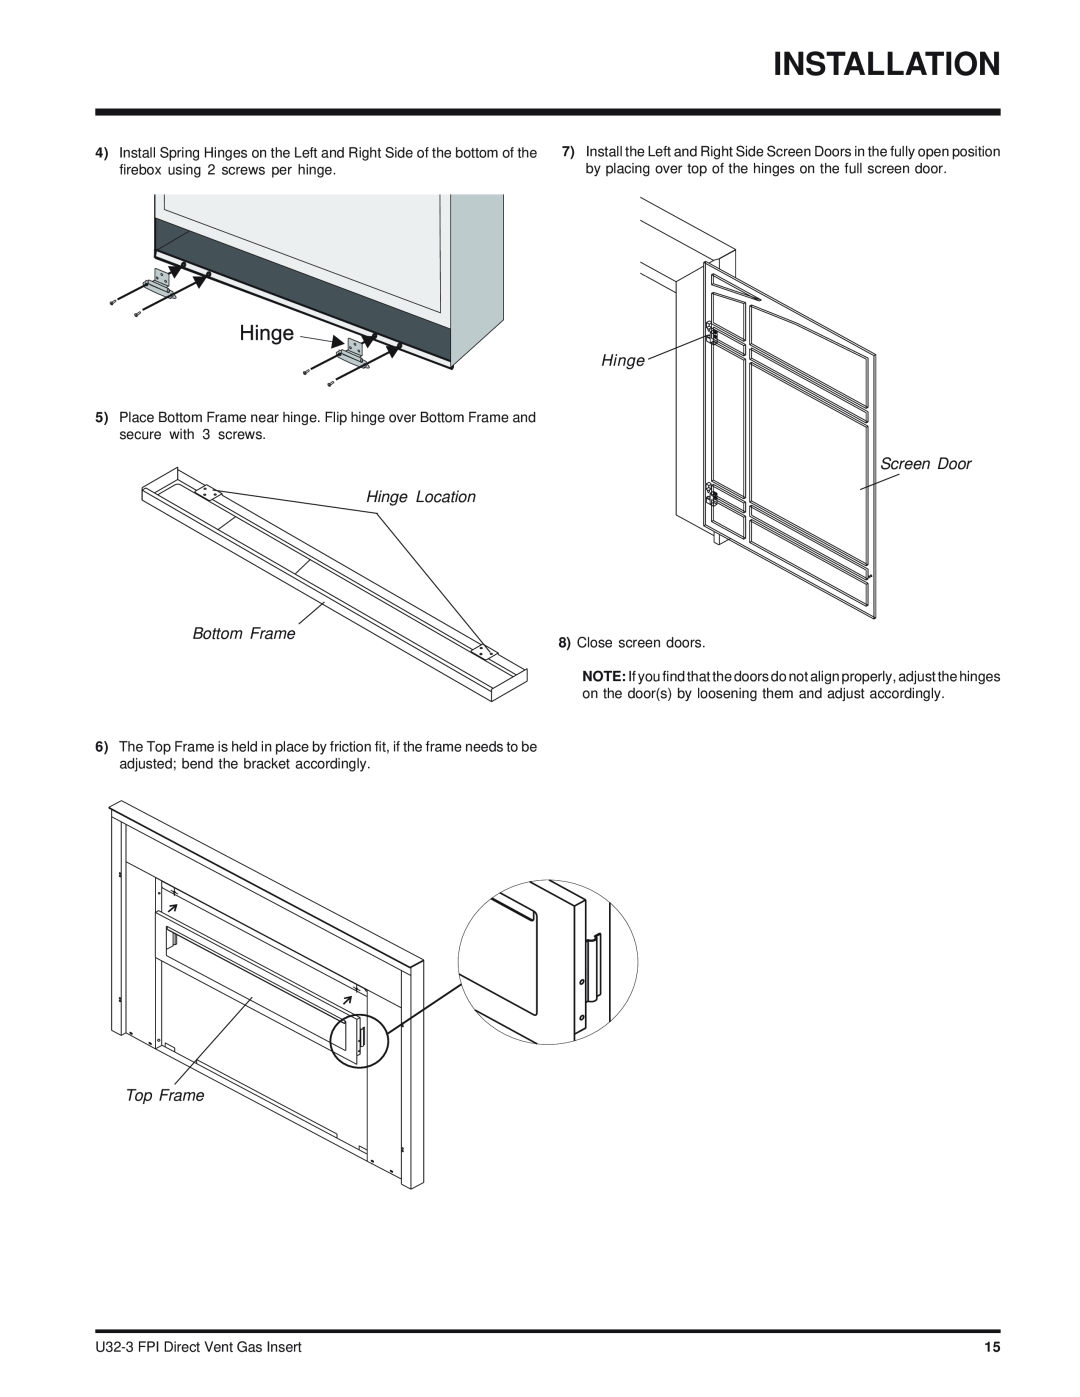 Regency U32-NG3 installation manual Screen Door Hinge Location Bottom Frame, Top Frame 